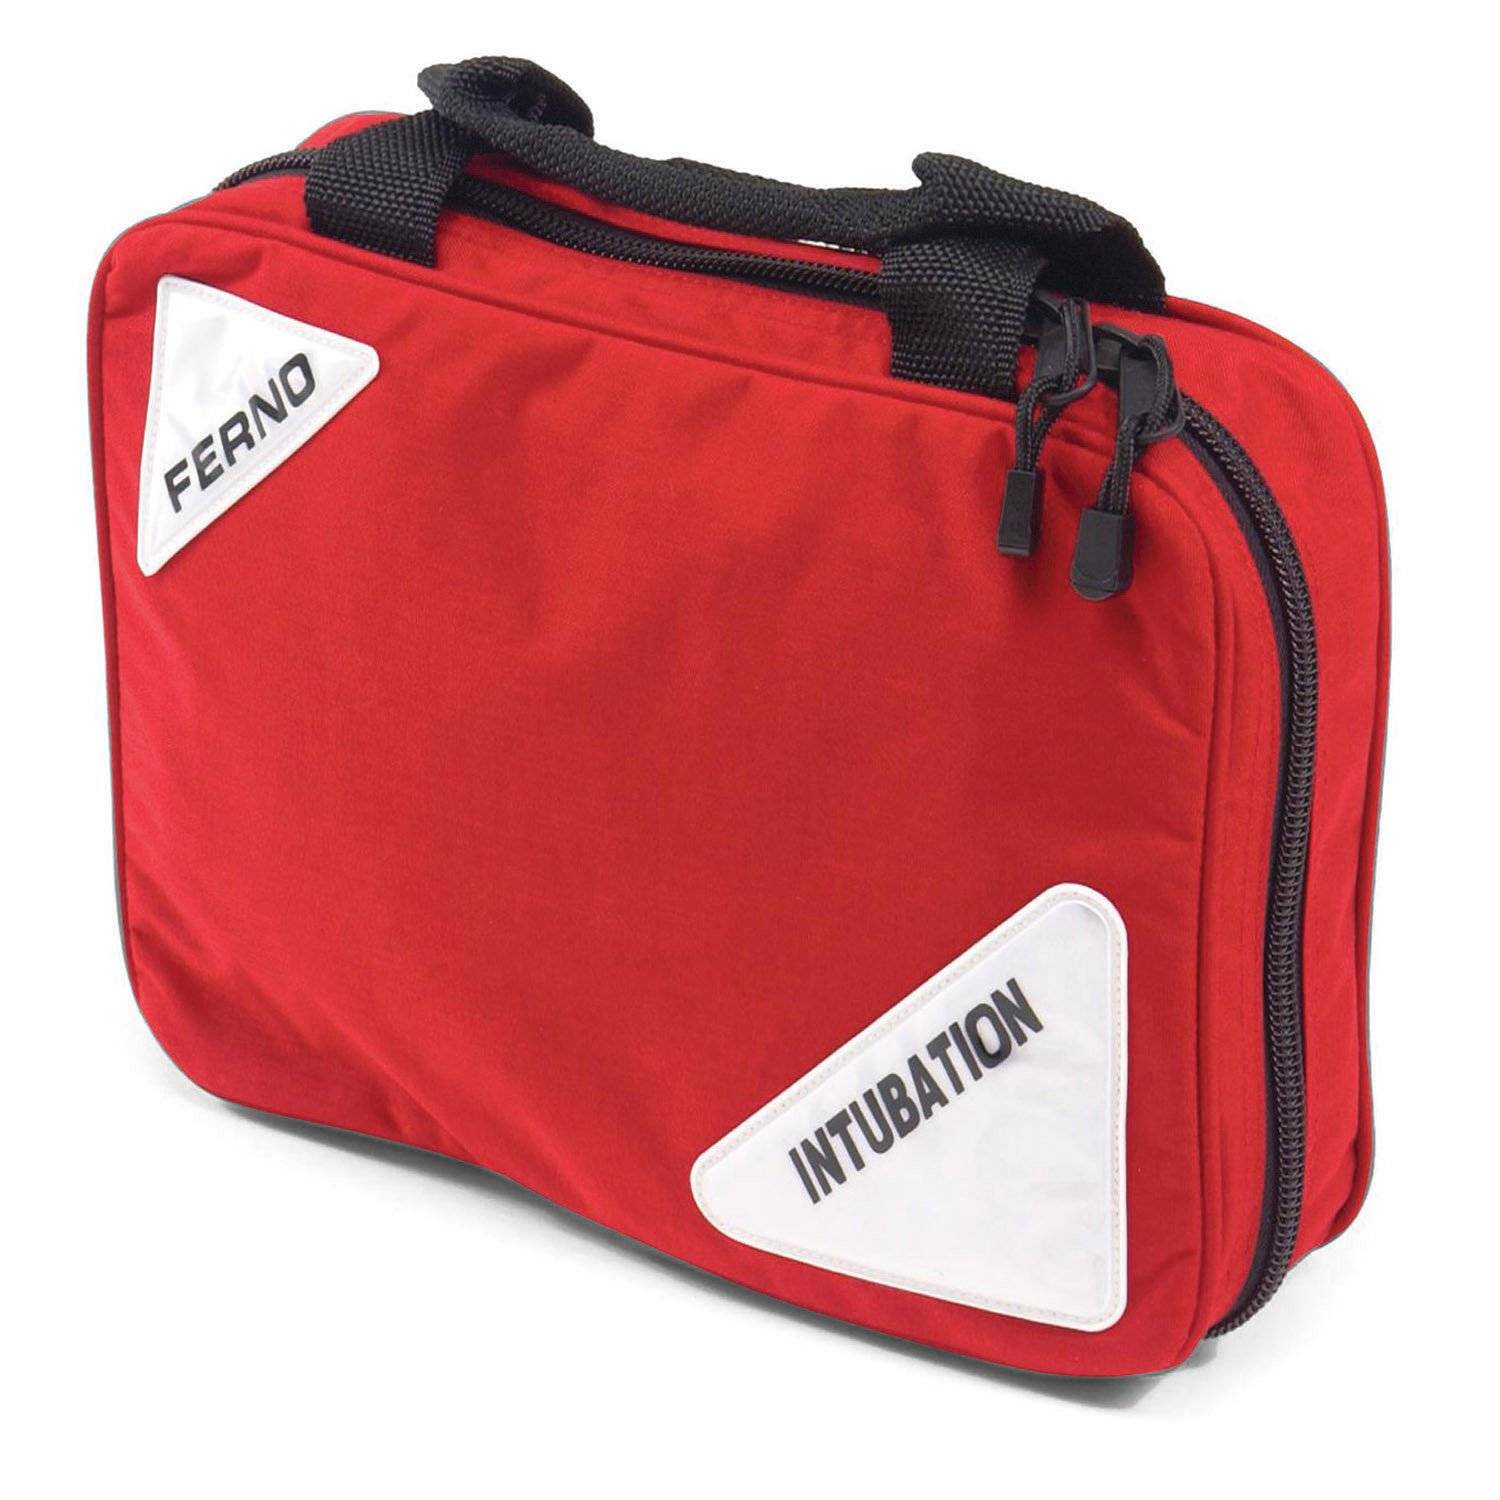 Ferno-Washington Inc. Professional Intubation Mini Bag